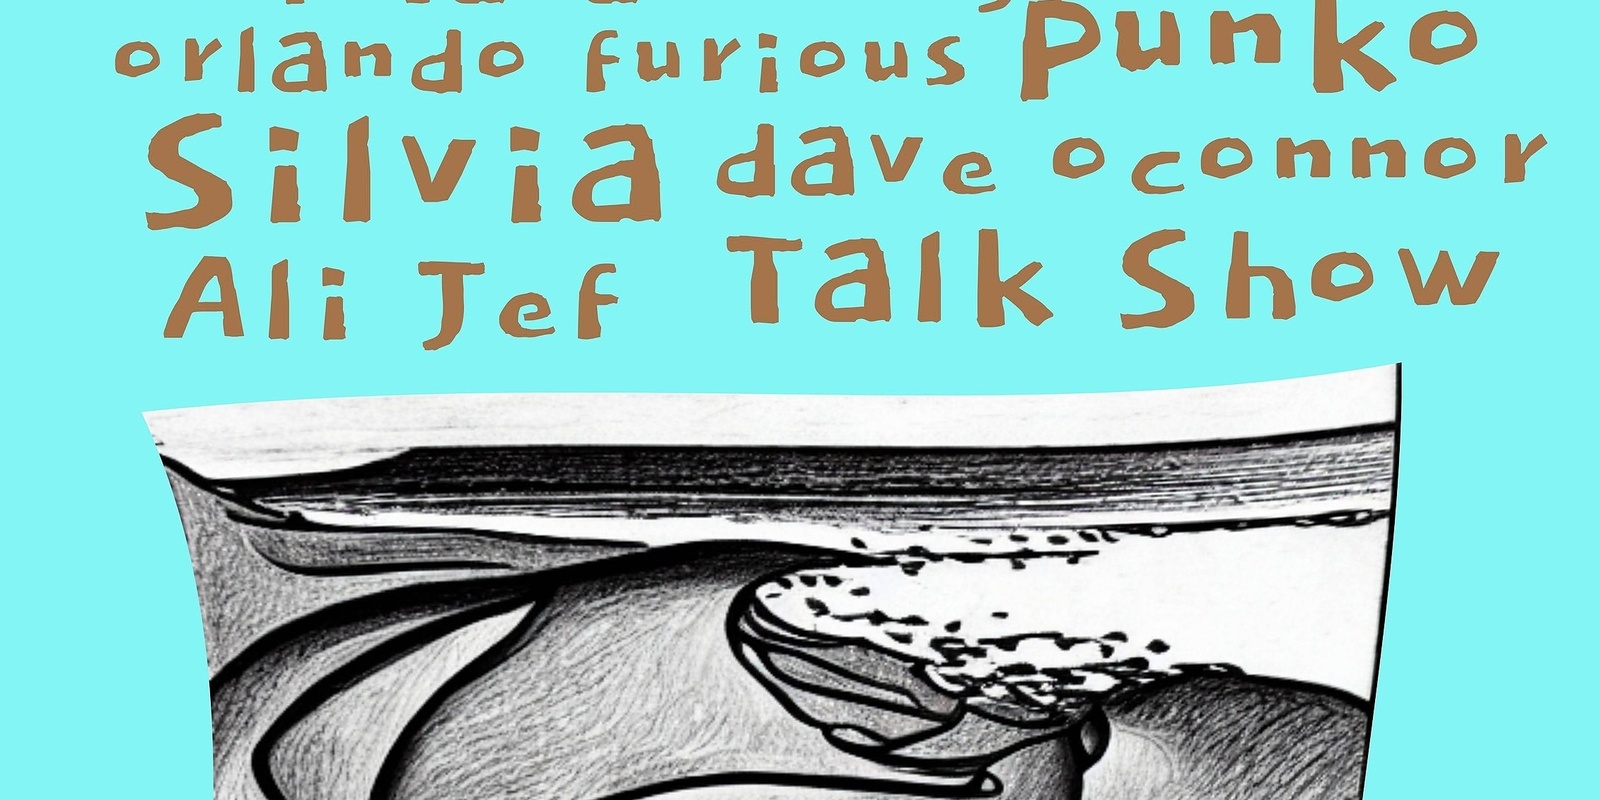 Banner image for Punko, Dave O'Connor, Silvia, Talk Show, Orlando furious, Ali.Jef 